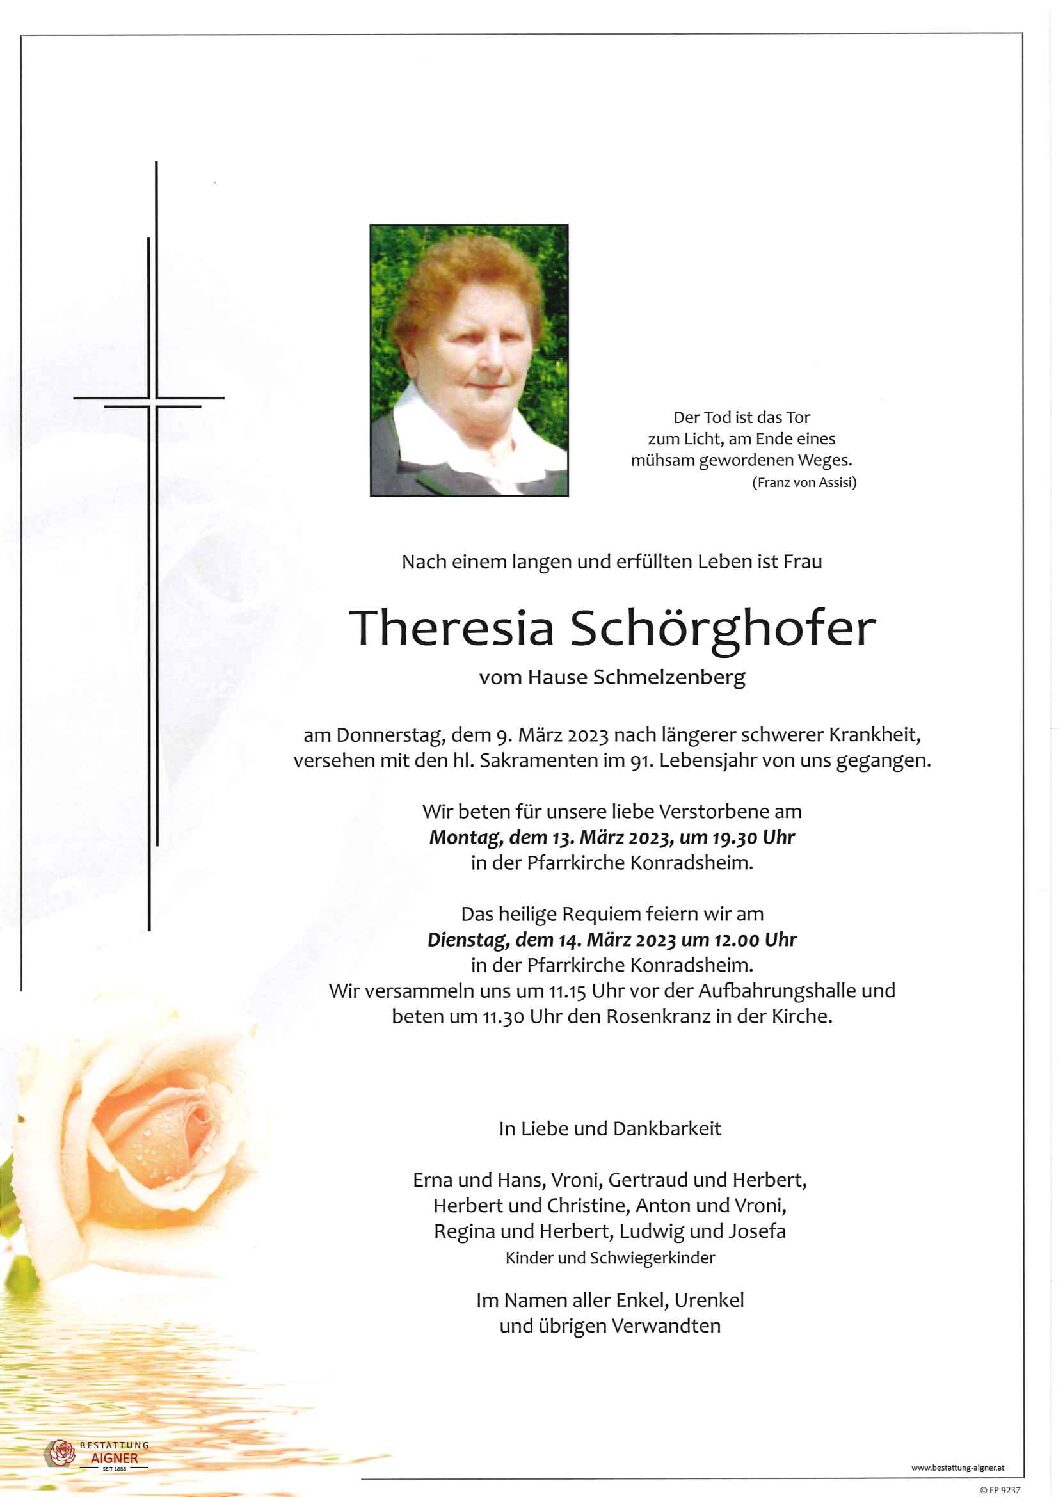 Theresia Schörghofer